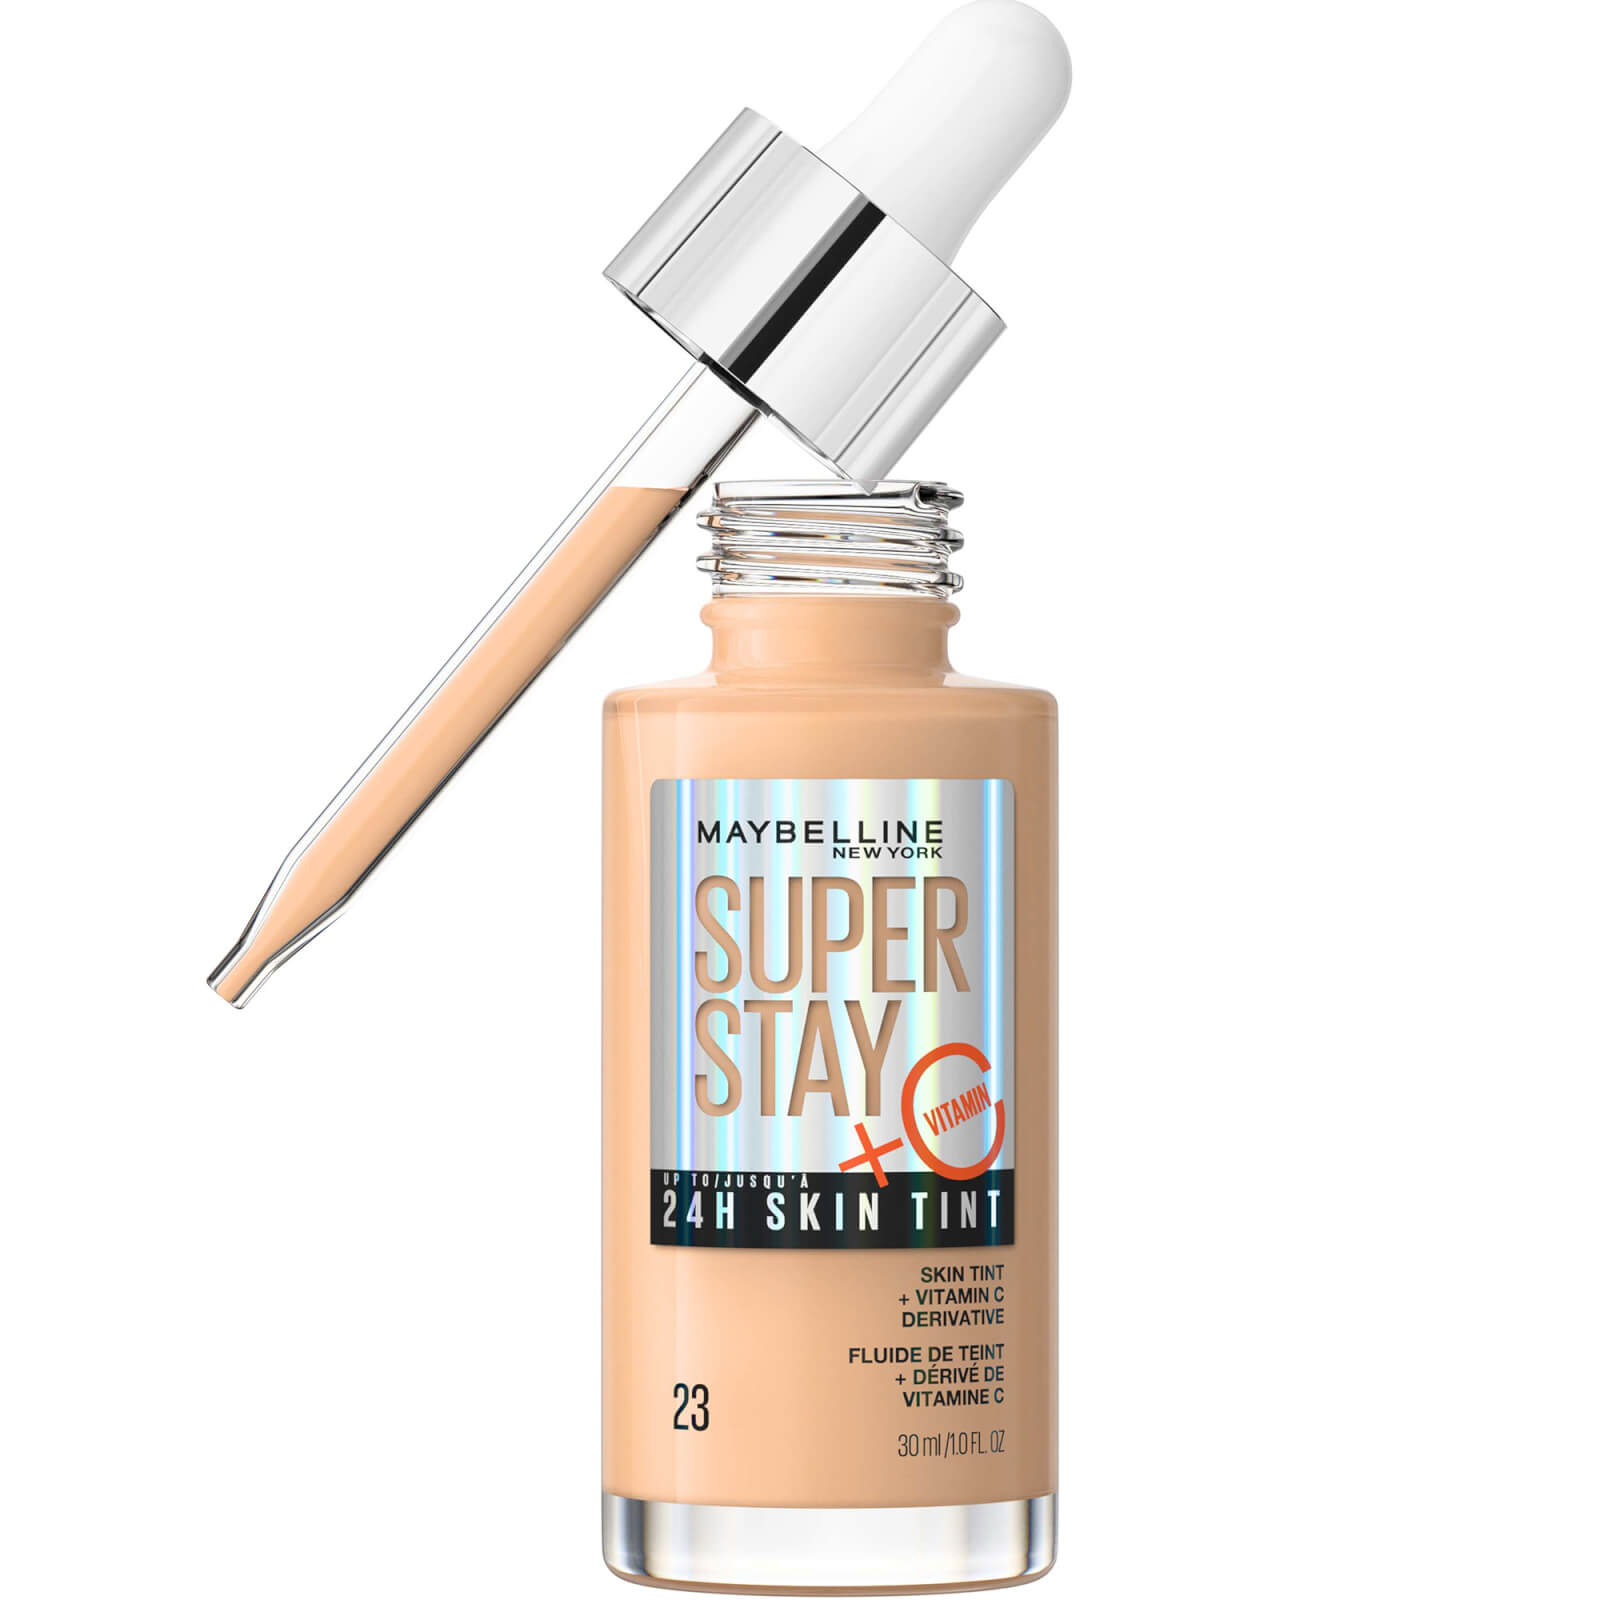 Zdjęcia - Podkład i baza pod makijaż Maybelline Super Stay up to 24H Skin Tint Foundation + Vitamin C 30ml (Var 